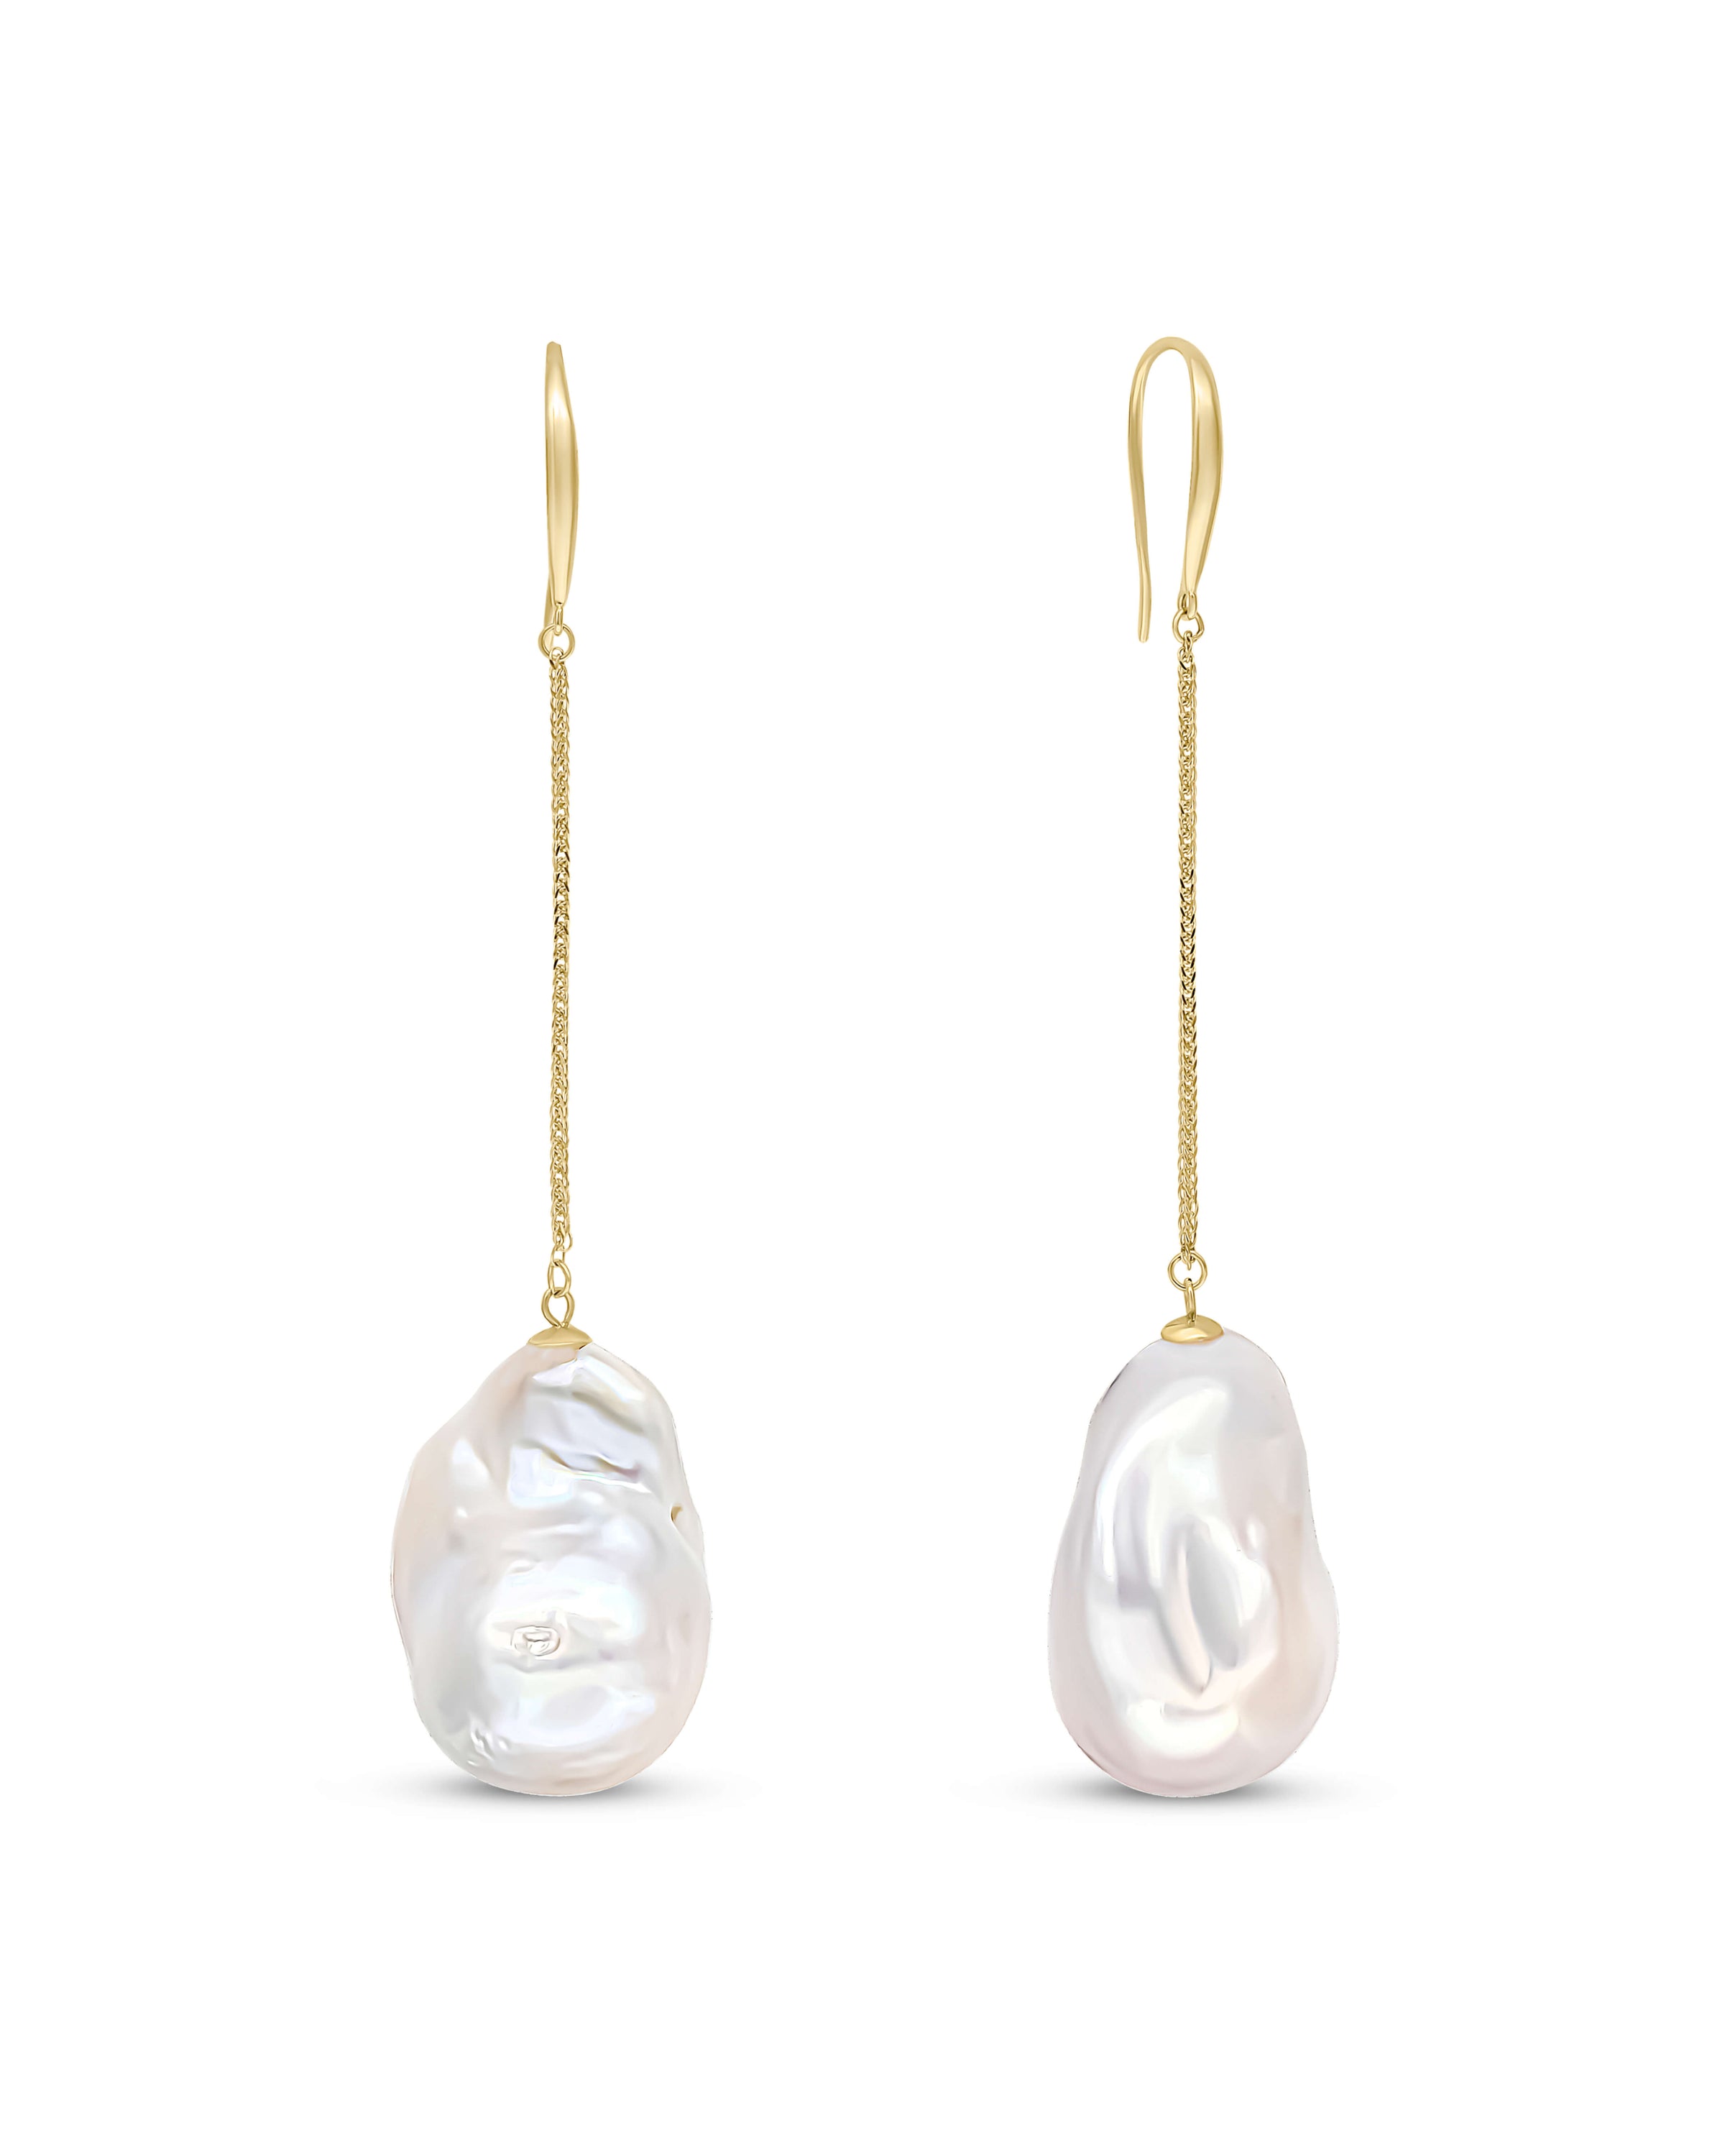 Birger Jarls 23 Irregular Baroque Pearl Drop Earrings,Fish Hook Earrings  for Women,14K Gold Filled Pearl Dangle Earrings,Earrings for Sensitive  Ears